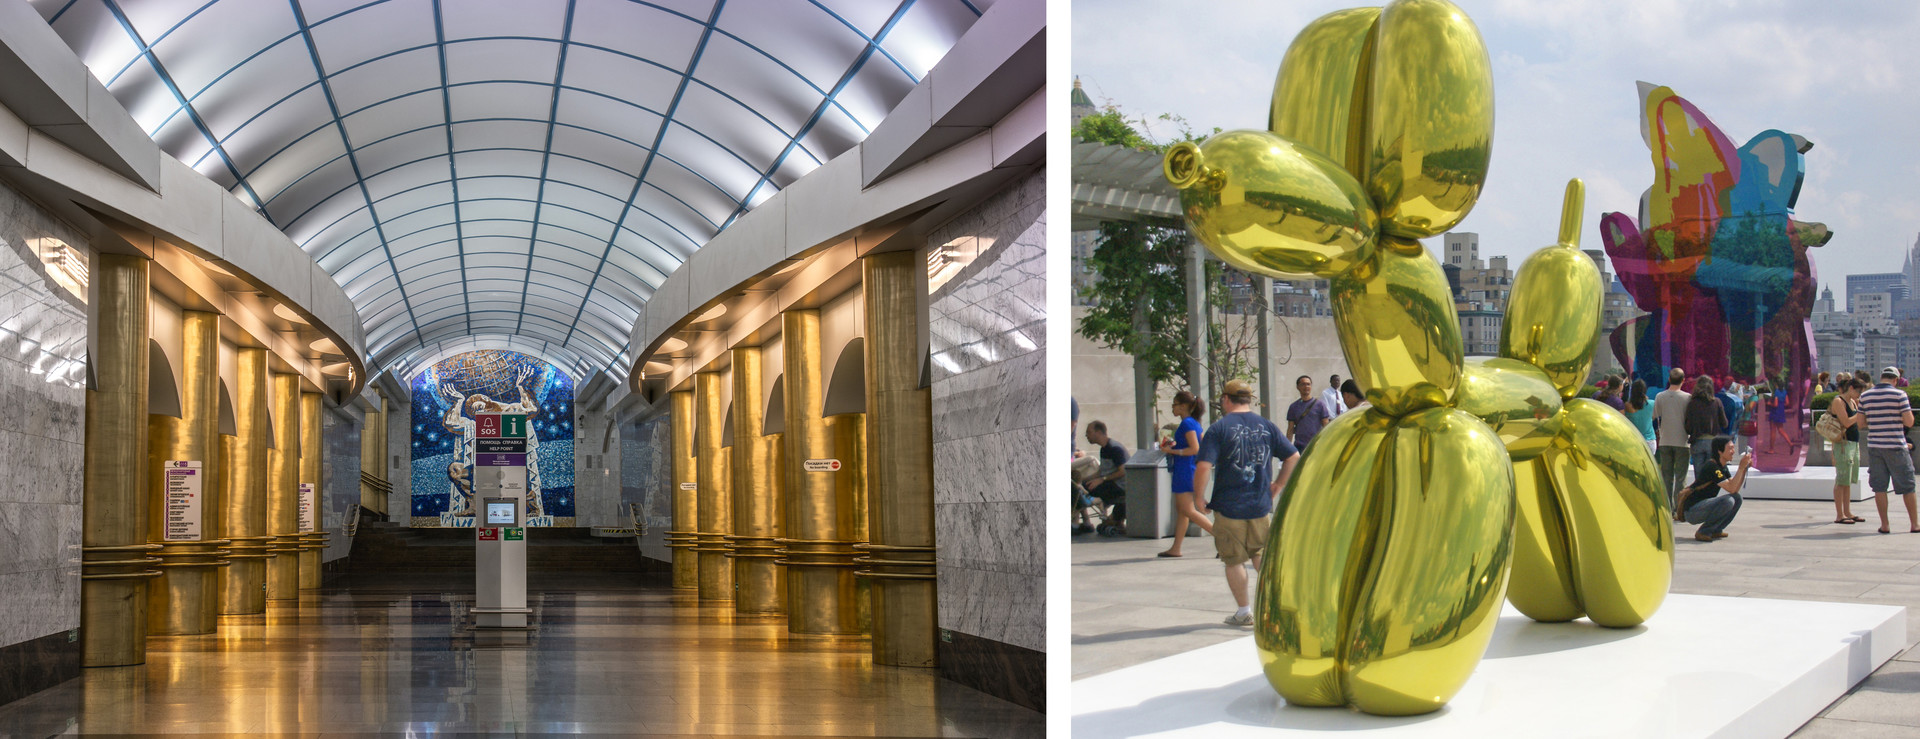 Tiang-tiang emas di Stasiun Mezhdunarodnaya mengingatkan warga setempat pada balon anjing karya seniman Amerika Jeff Koons.